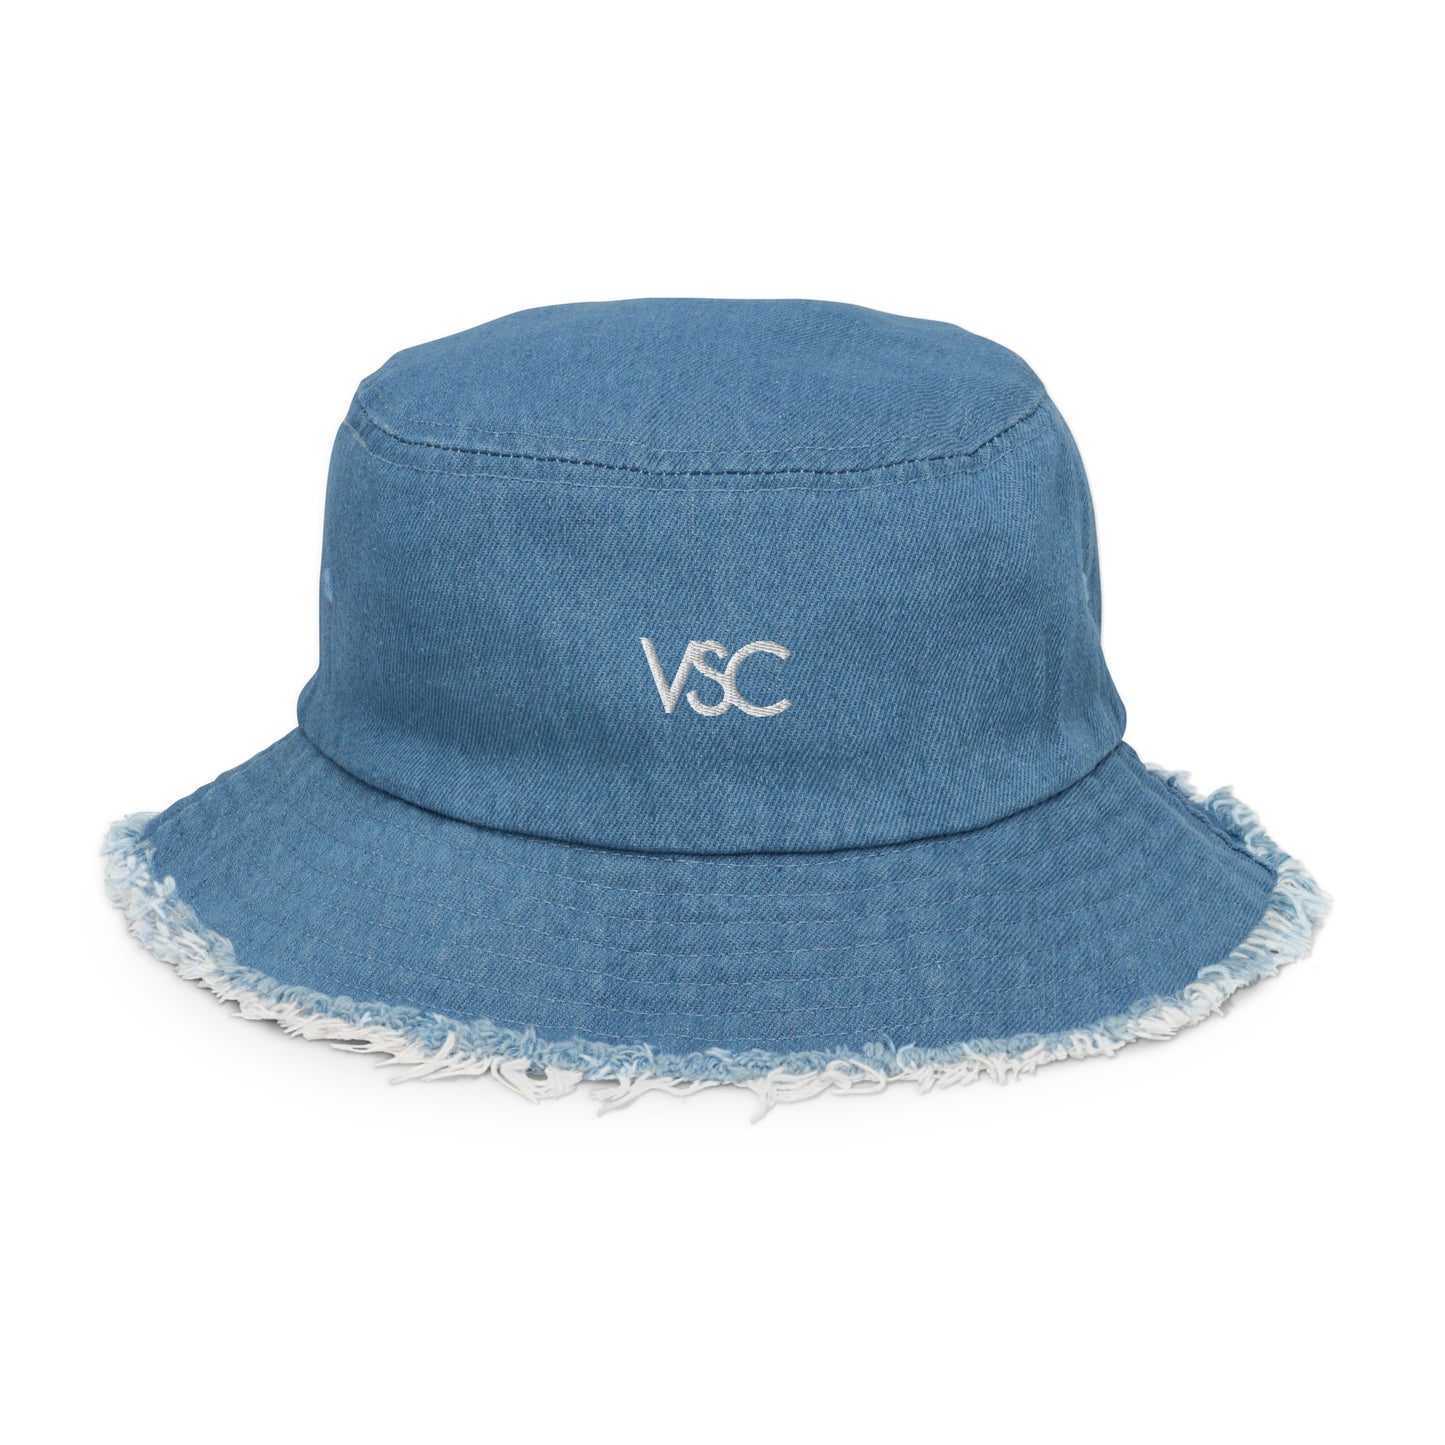 VSC Distressed denim bucket hat